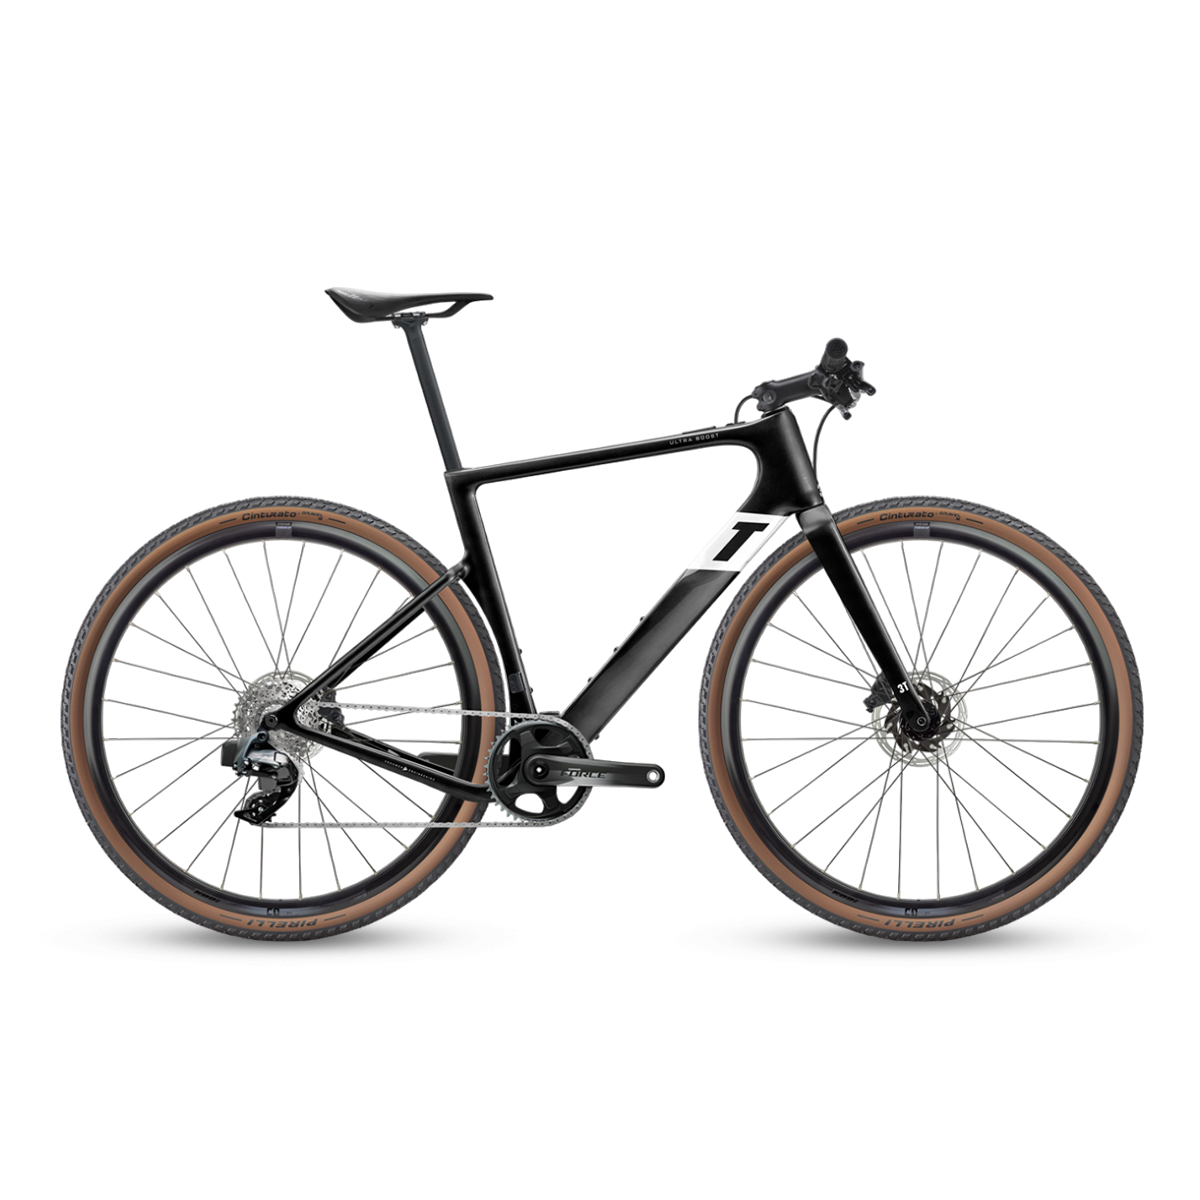  Ultra Boost Urban 700c e-Bike - Schwarz|Weiß